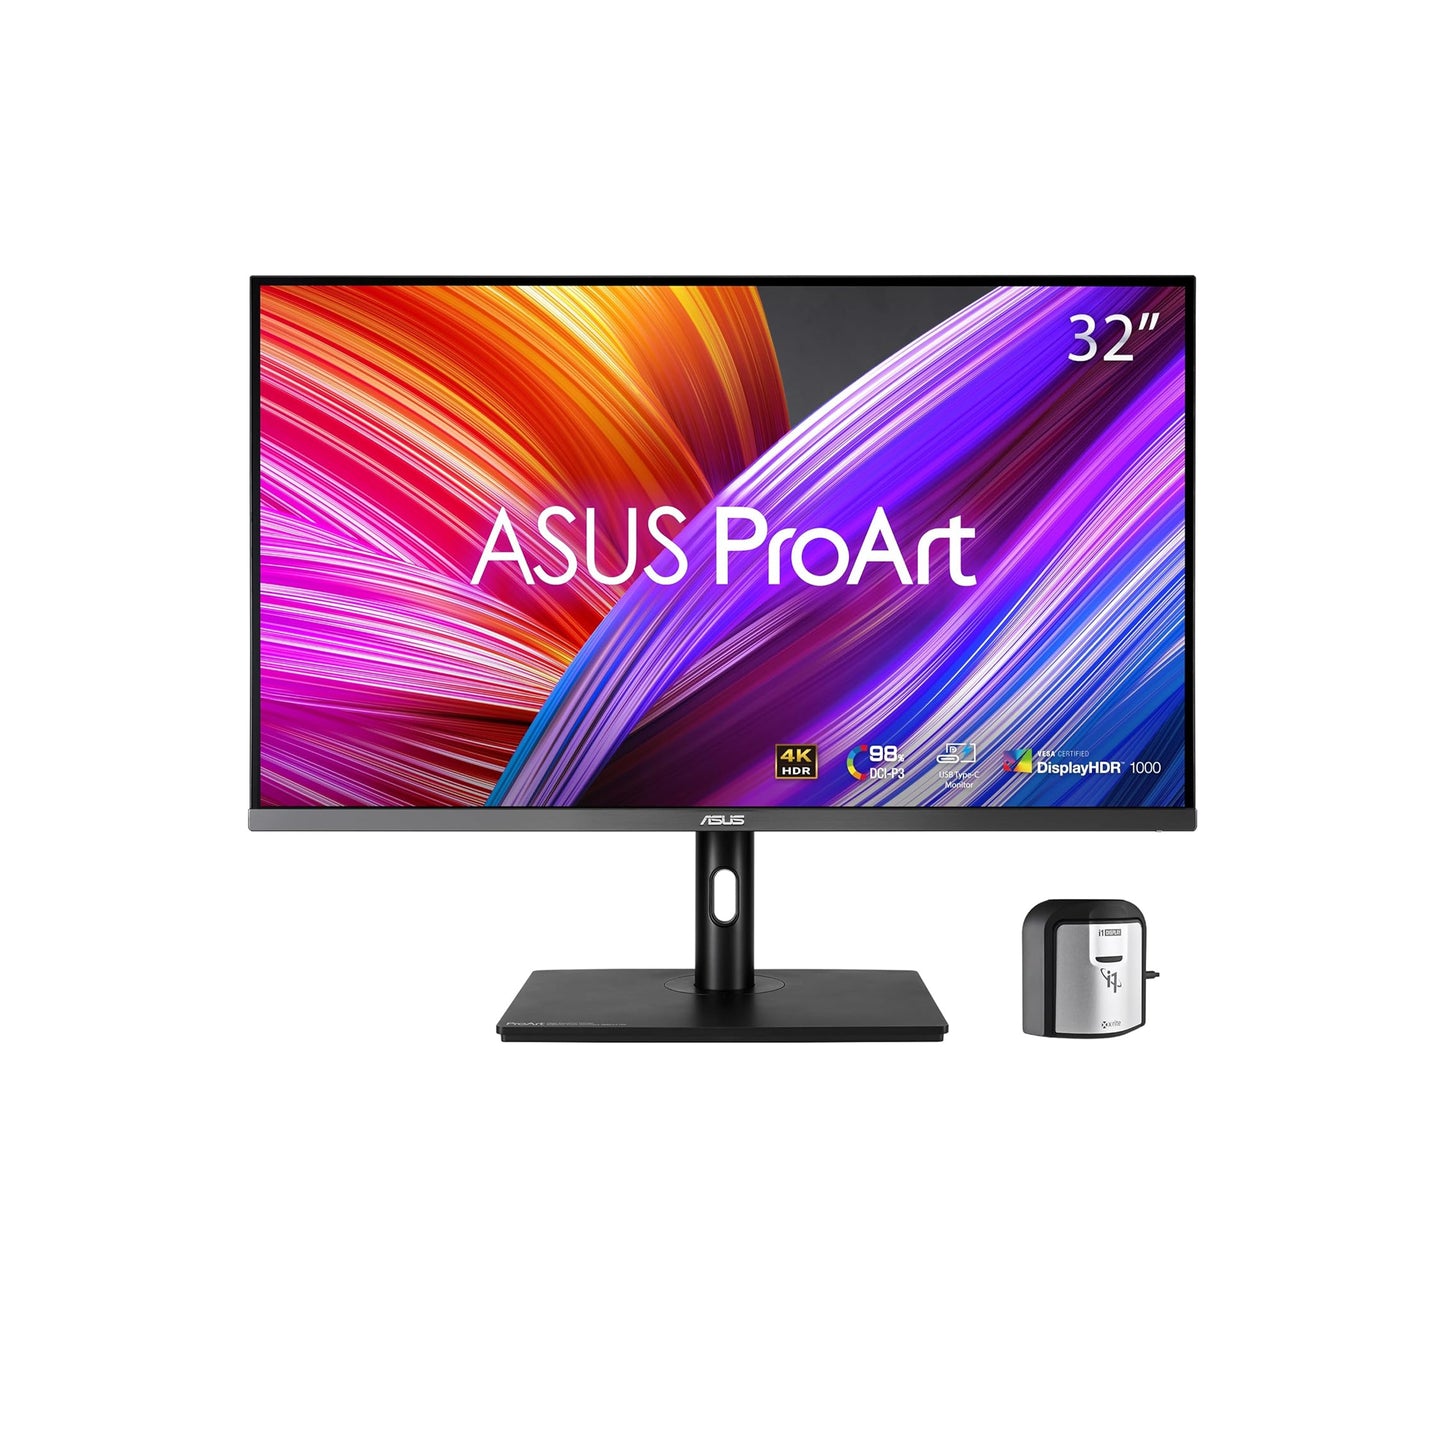 ASUS ProArt Display 32” 4K HDR Computer Monitor (PA32UCR-K) - IPS, 1000nits, ΔE < 1, 98% DCI-P3, 99.5% Adobe RGB, USB-C, HDMI, X-rite i1 Calibrator, Compatible with Laptop & Mac Monitor,BLACK